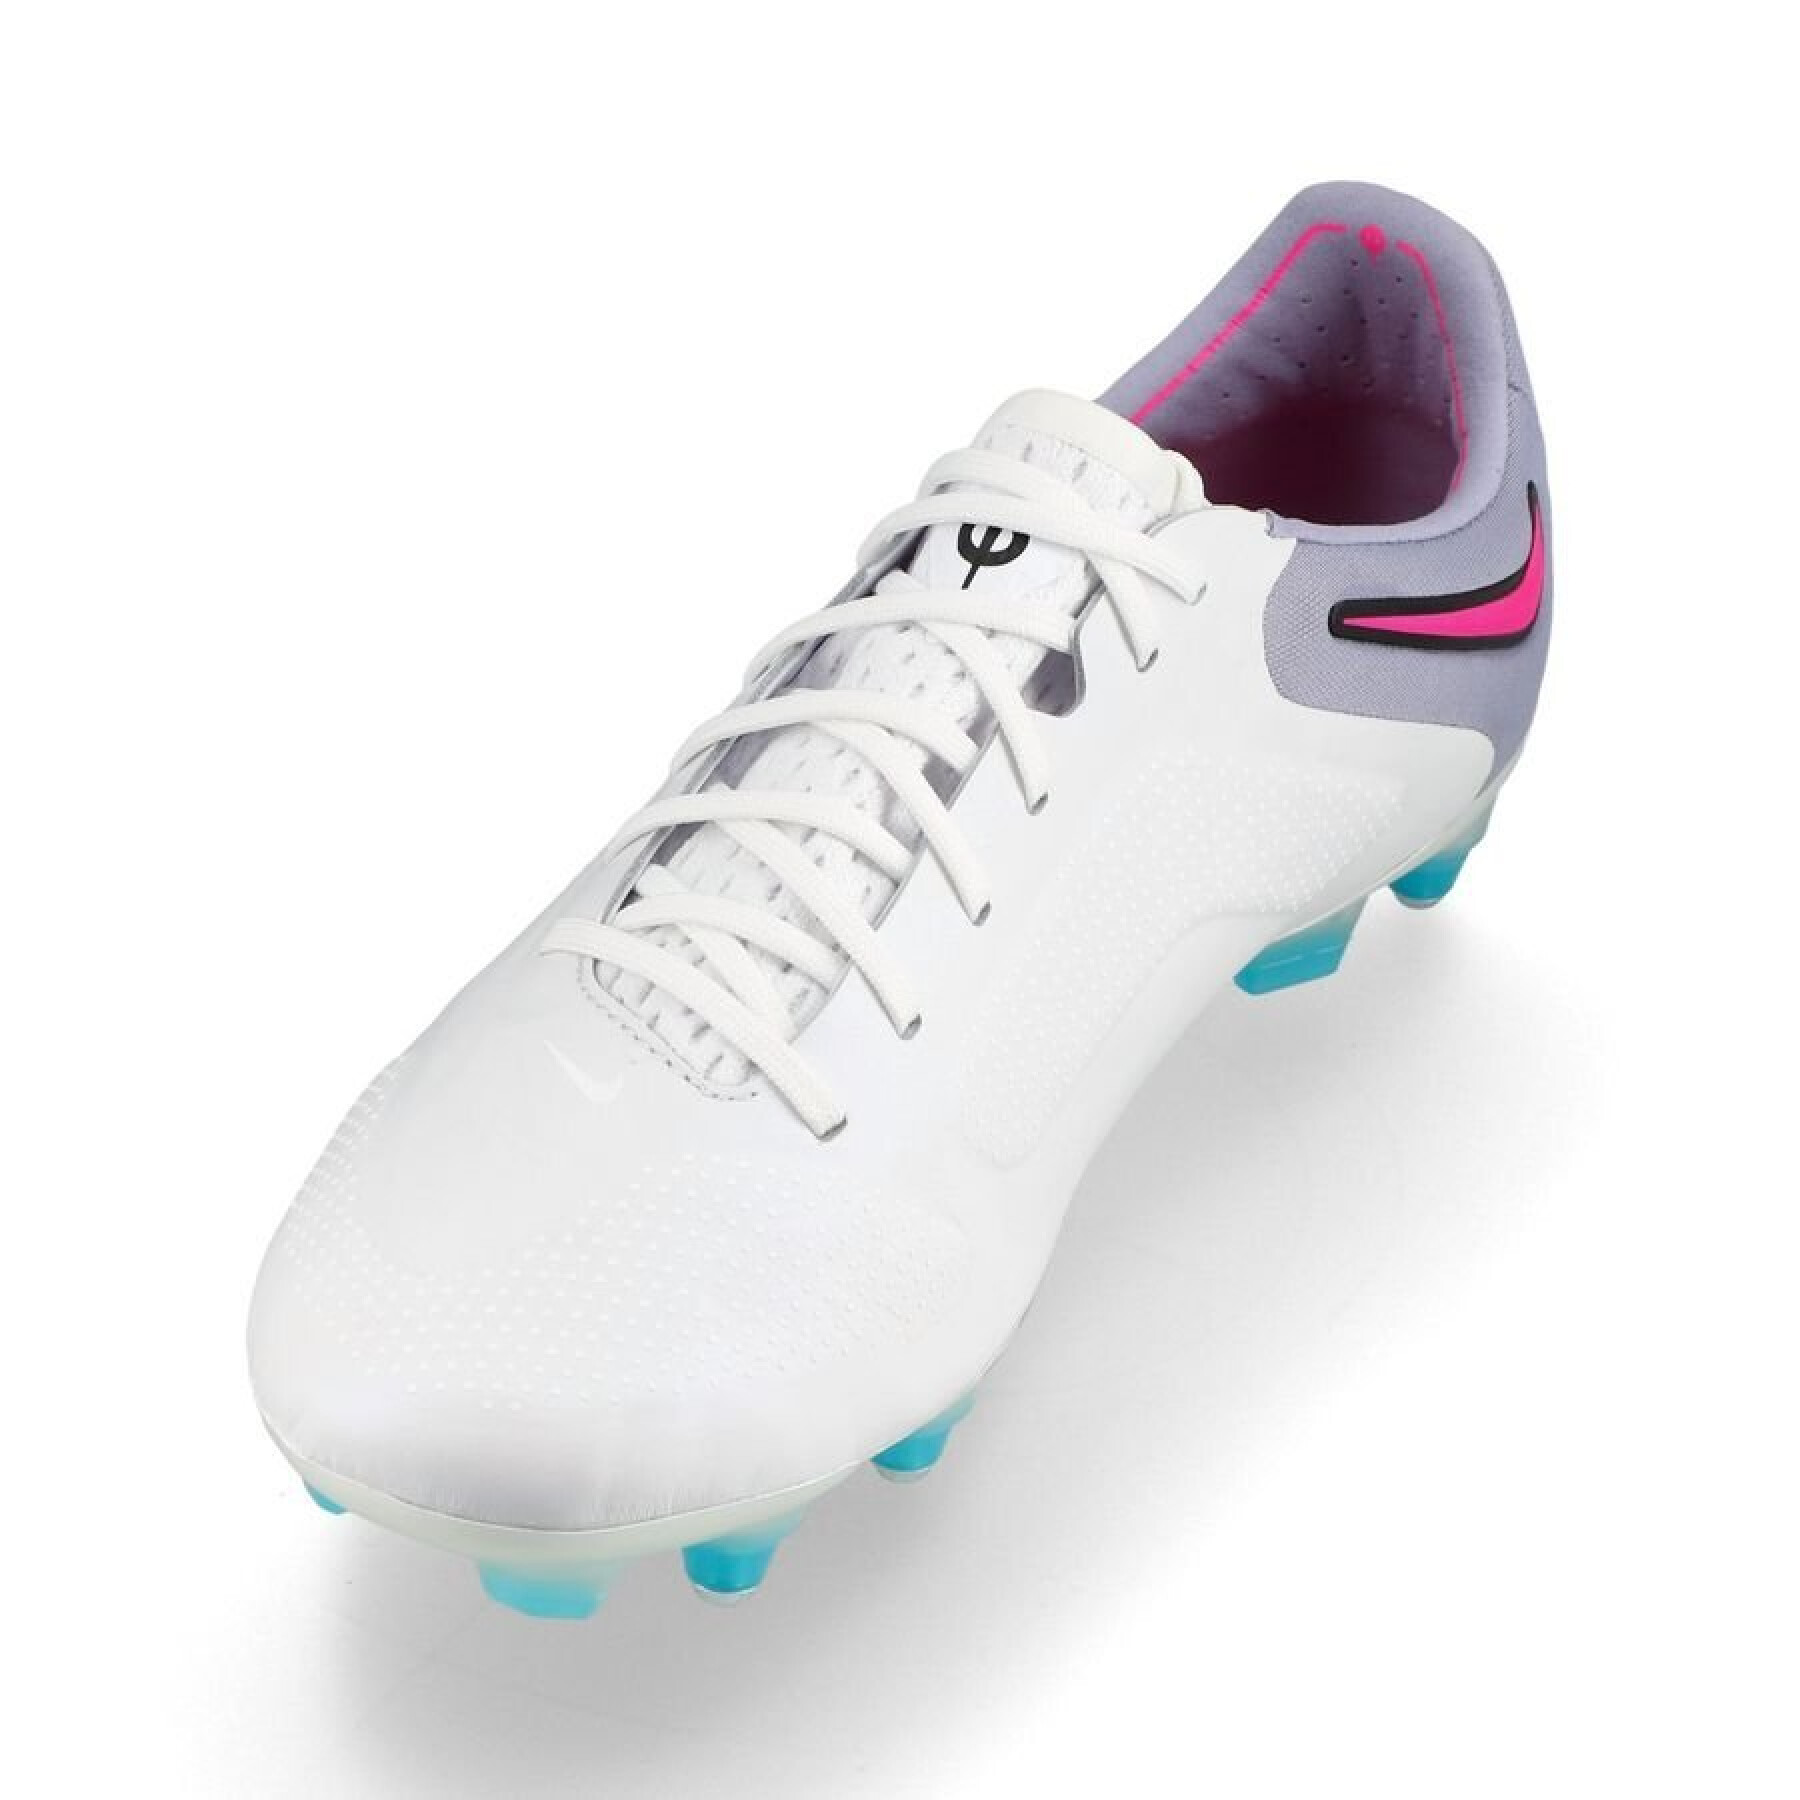 Soccer shoes Nike Tiempo Legend 9 Elite SG-Pro AC - Blast Pack